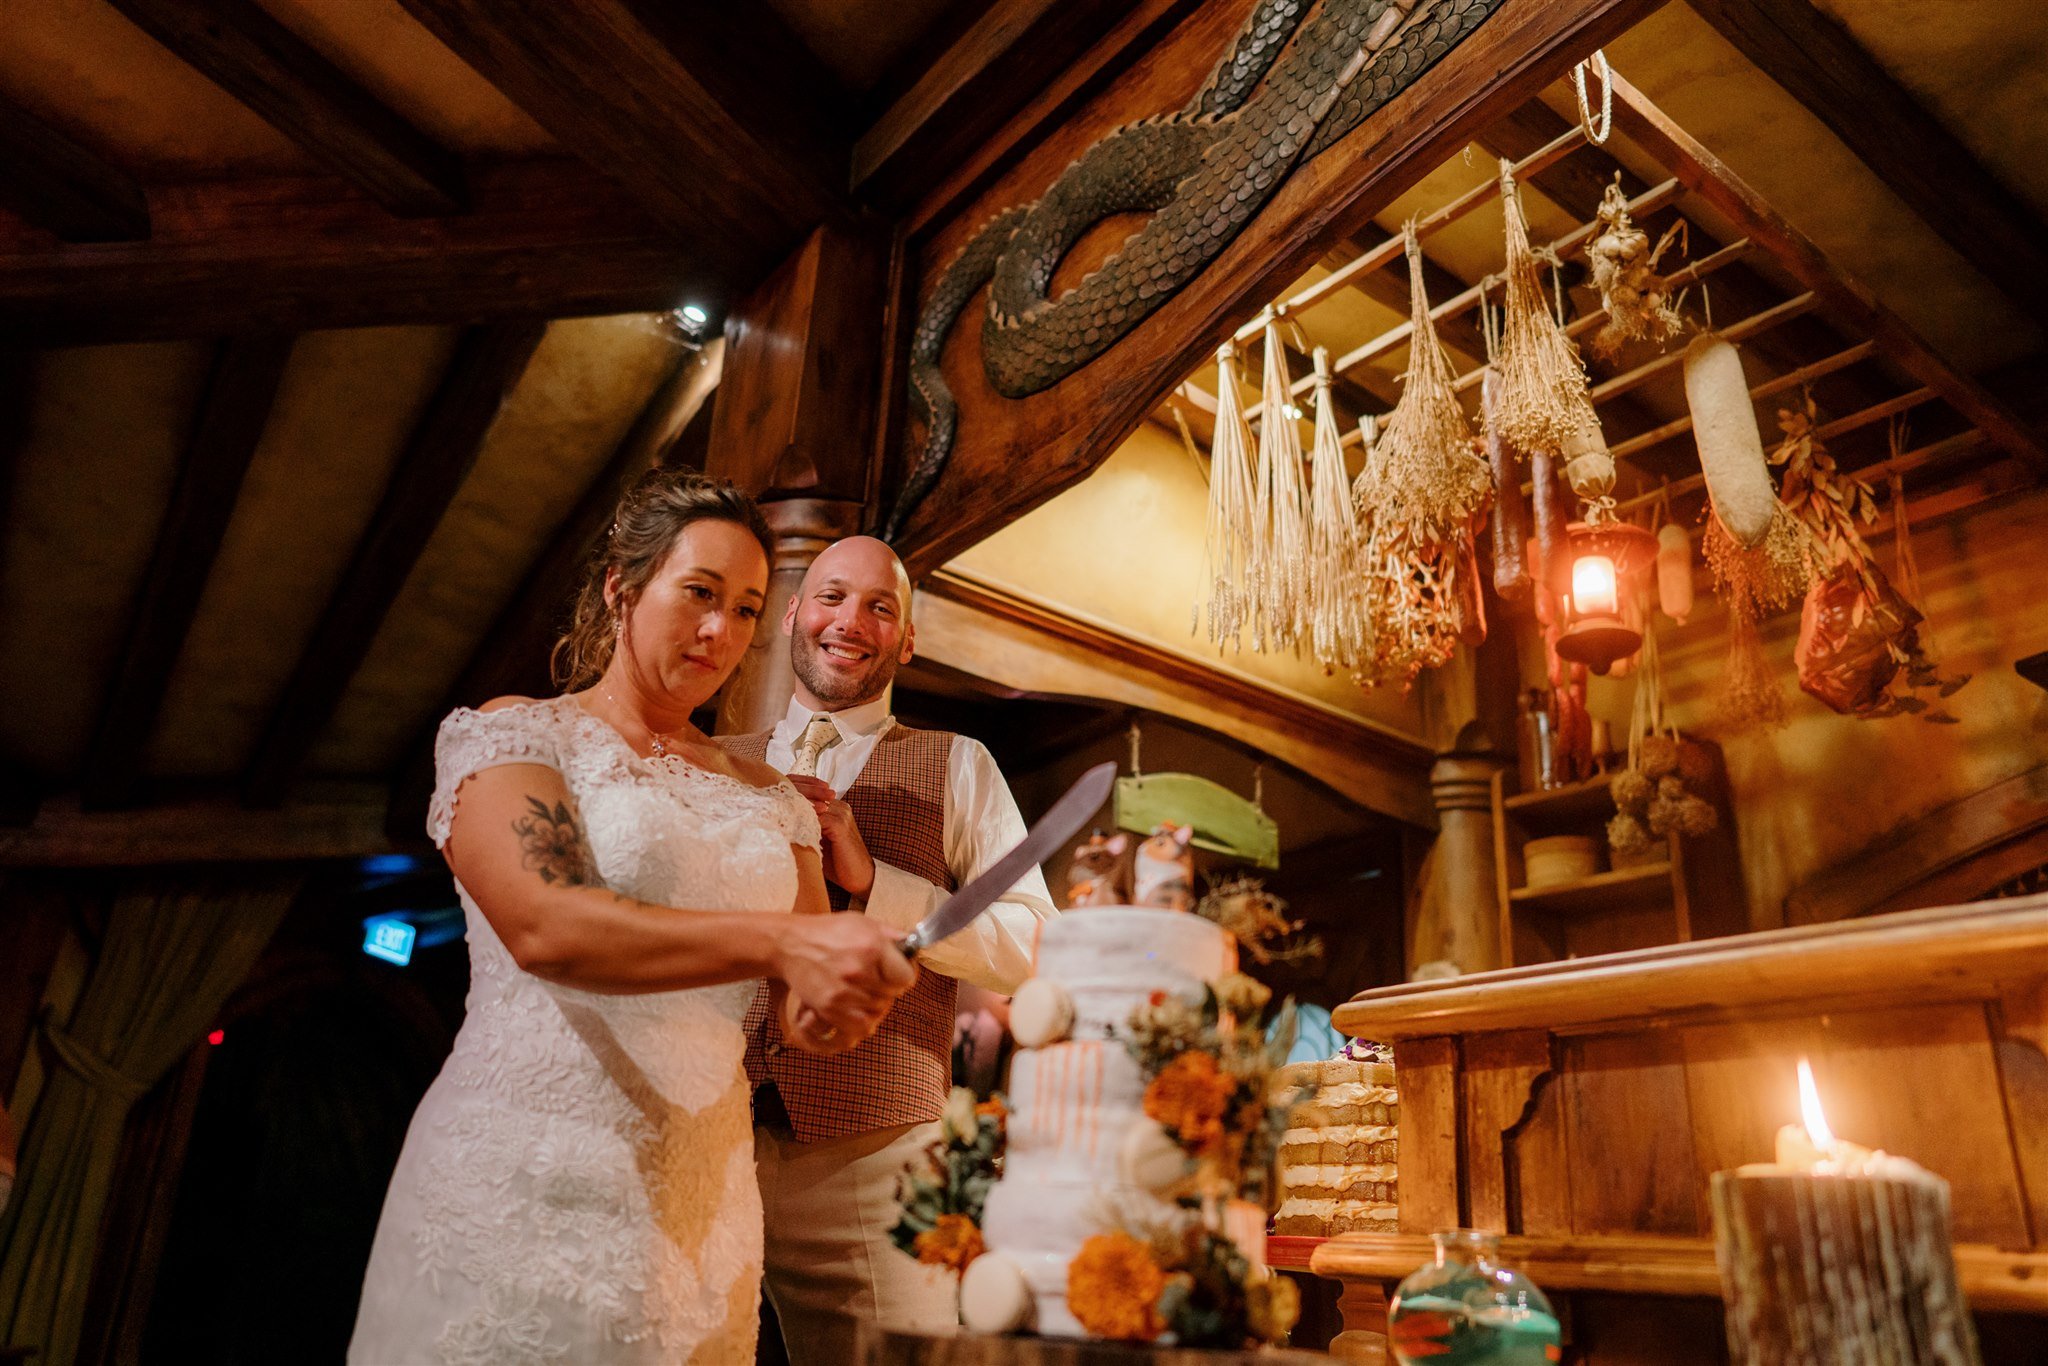 Matamata wedding venue | Hobbiton Tour | Auckland Wedding Videographer| Best Photographer| Top Videography | Wedding Reception Photography | The Green Dragon Inn | Dear White Productions